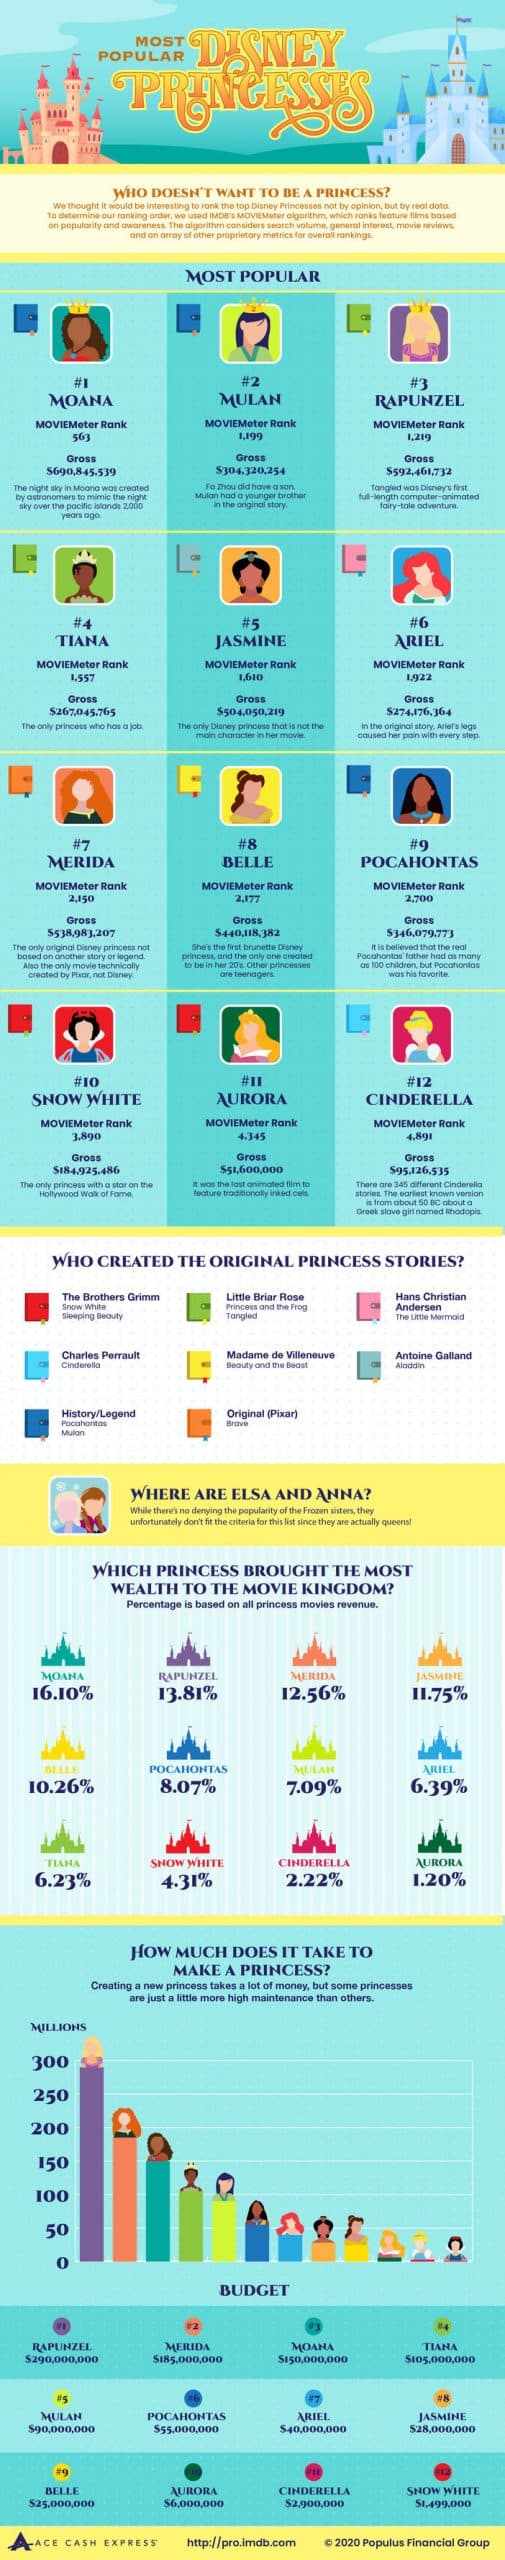 Most Popular Disney Princesses